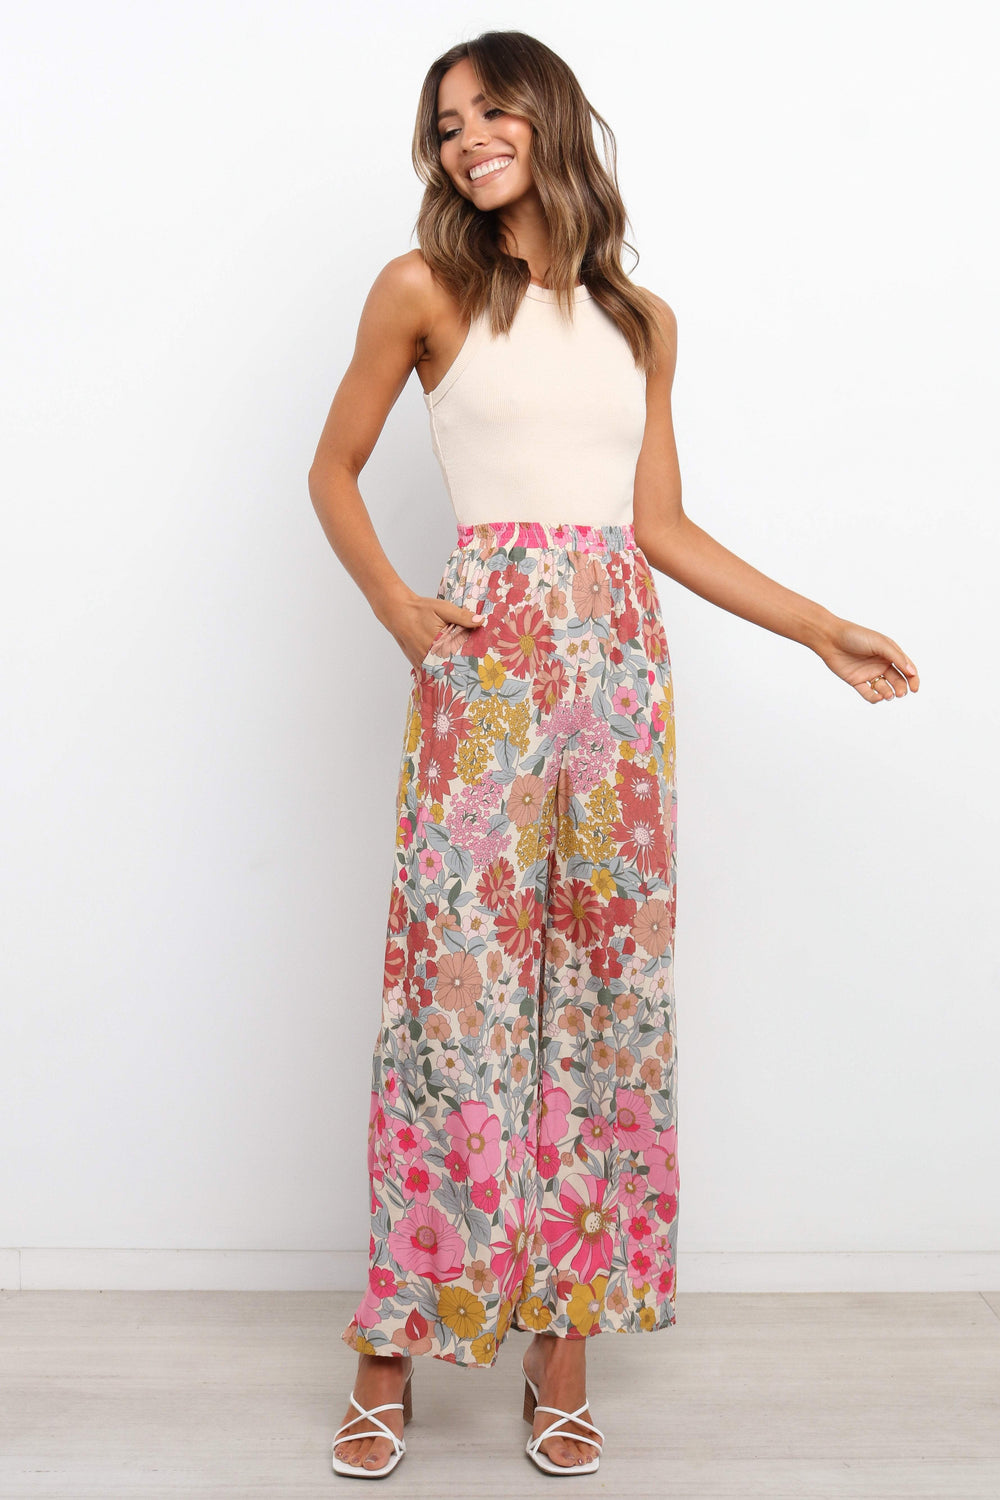 3/4 length pants (Floral) for women, Buy online